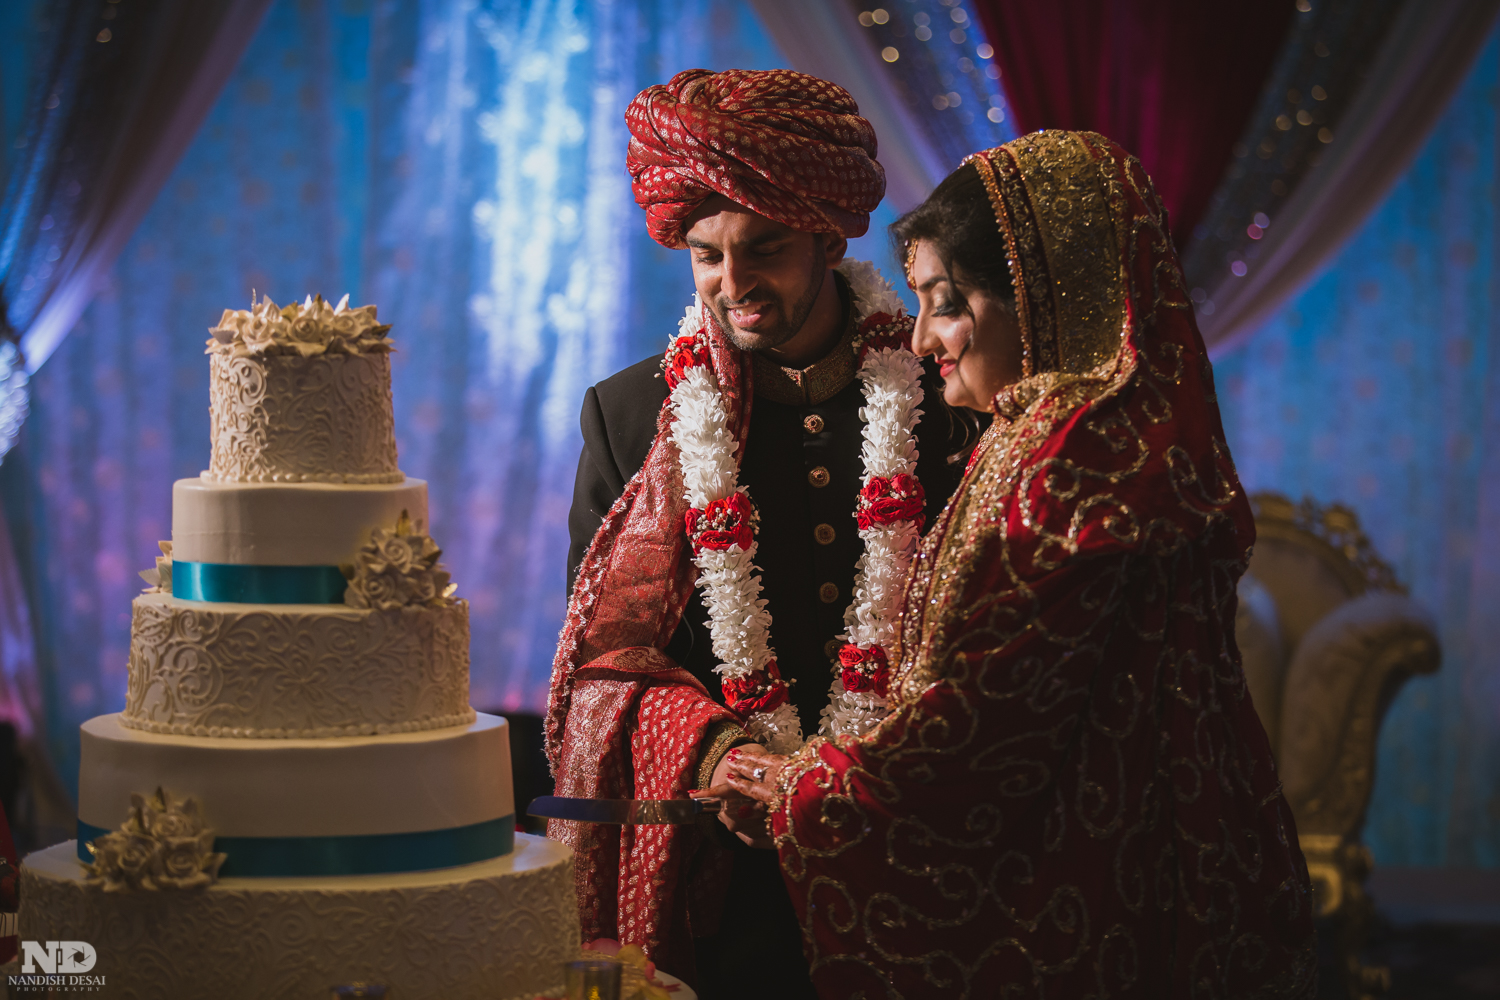 Nandish Desai Photography Weddings 11.jpg